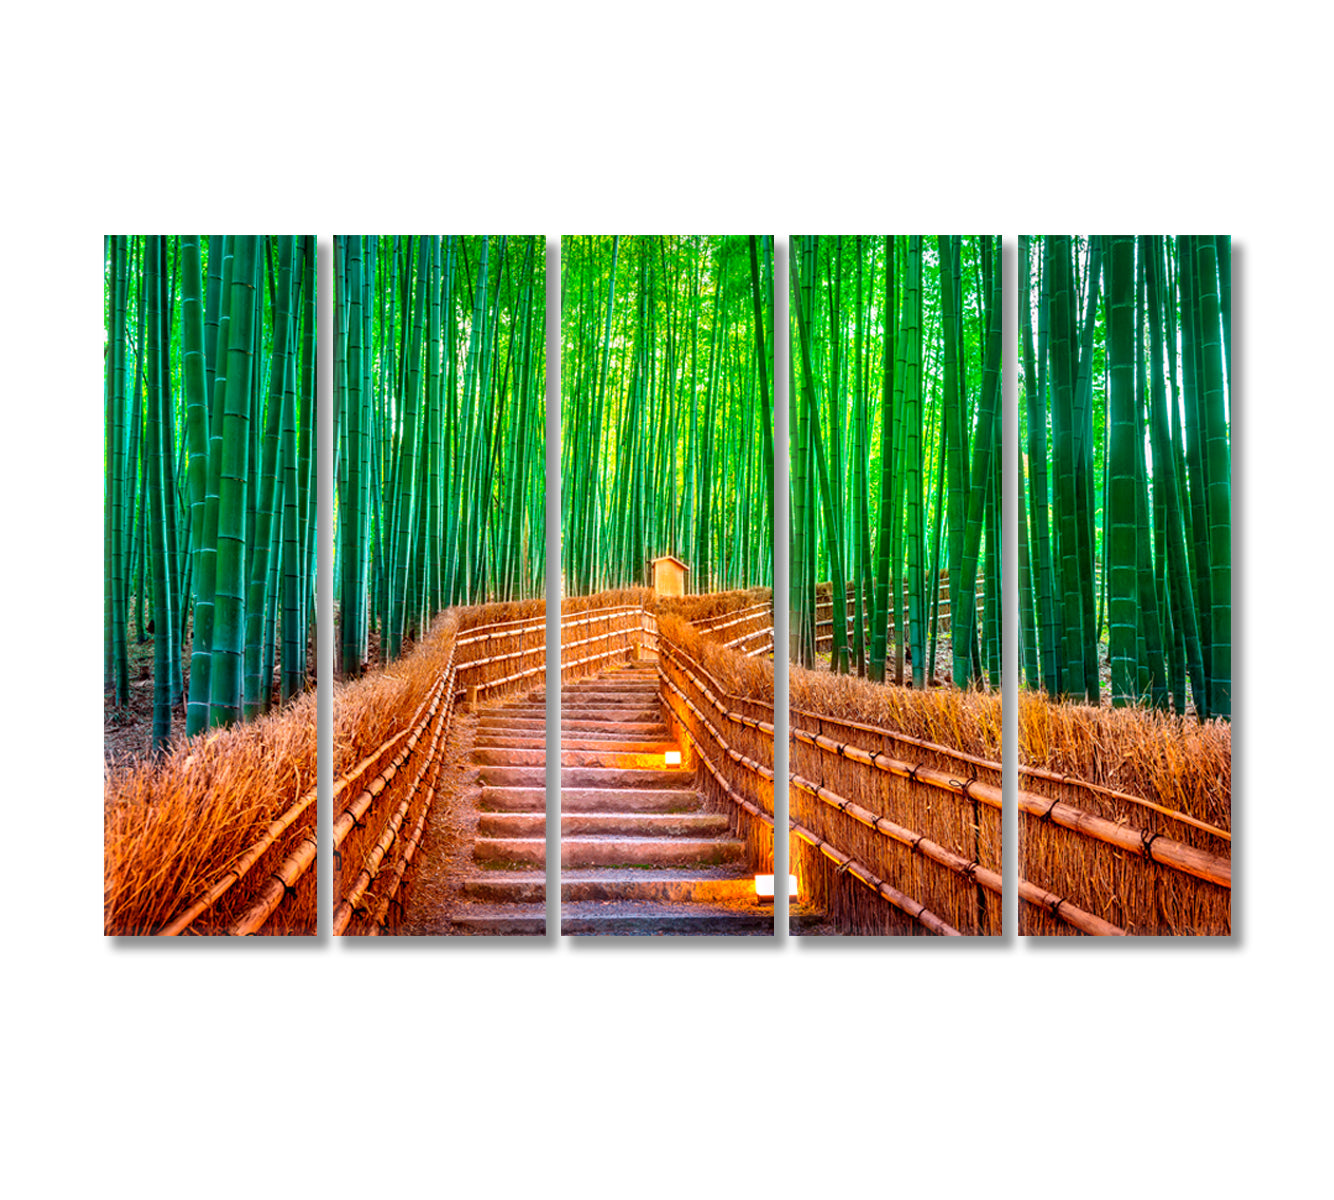 Bamboo Forest Kyoto Japan Canvas Print-Canvas Print-CetArt-5 Panels-36x24 inches-CetArt